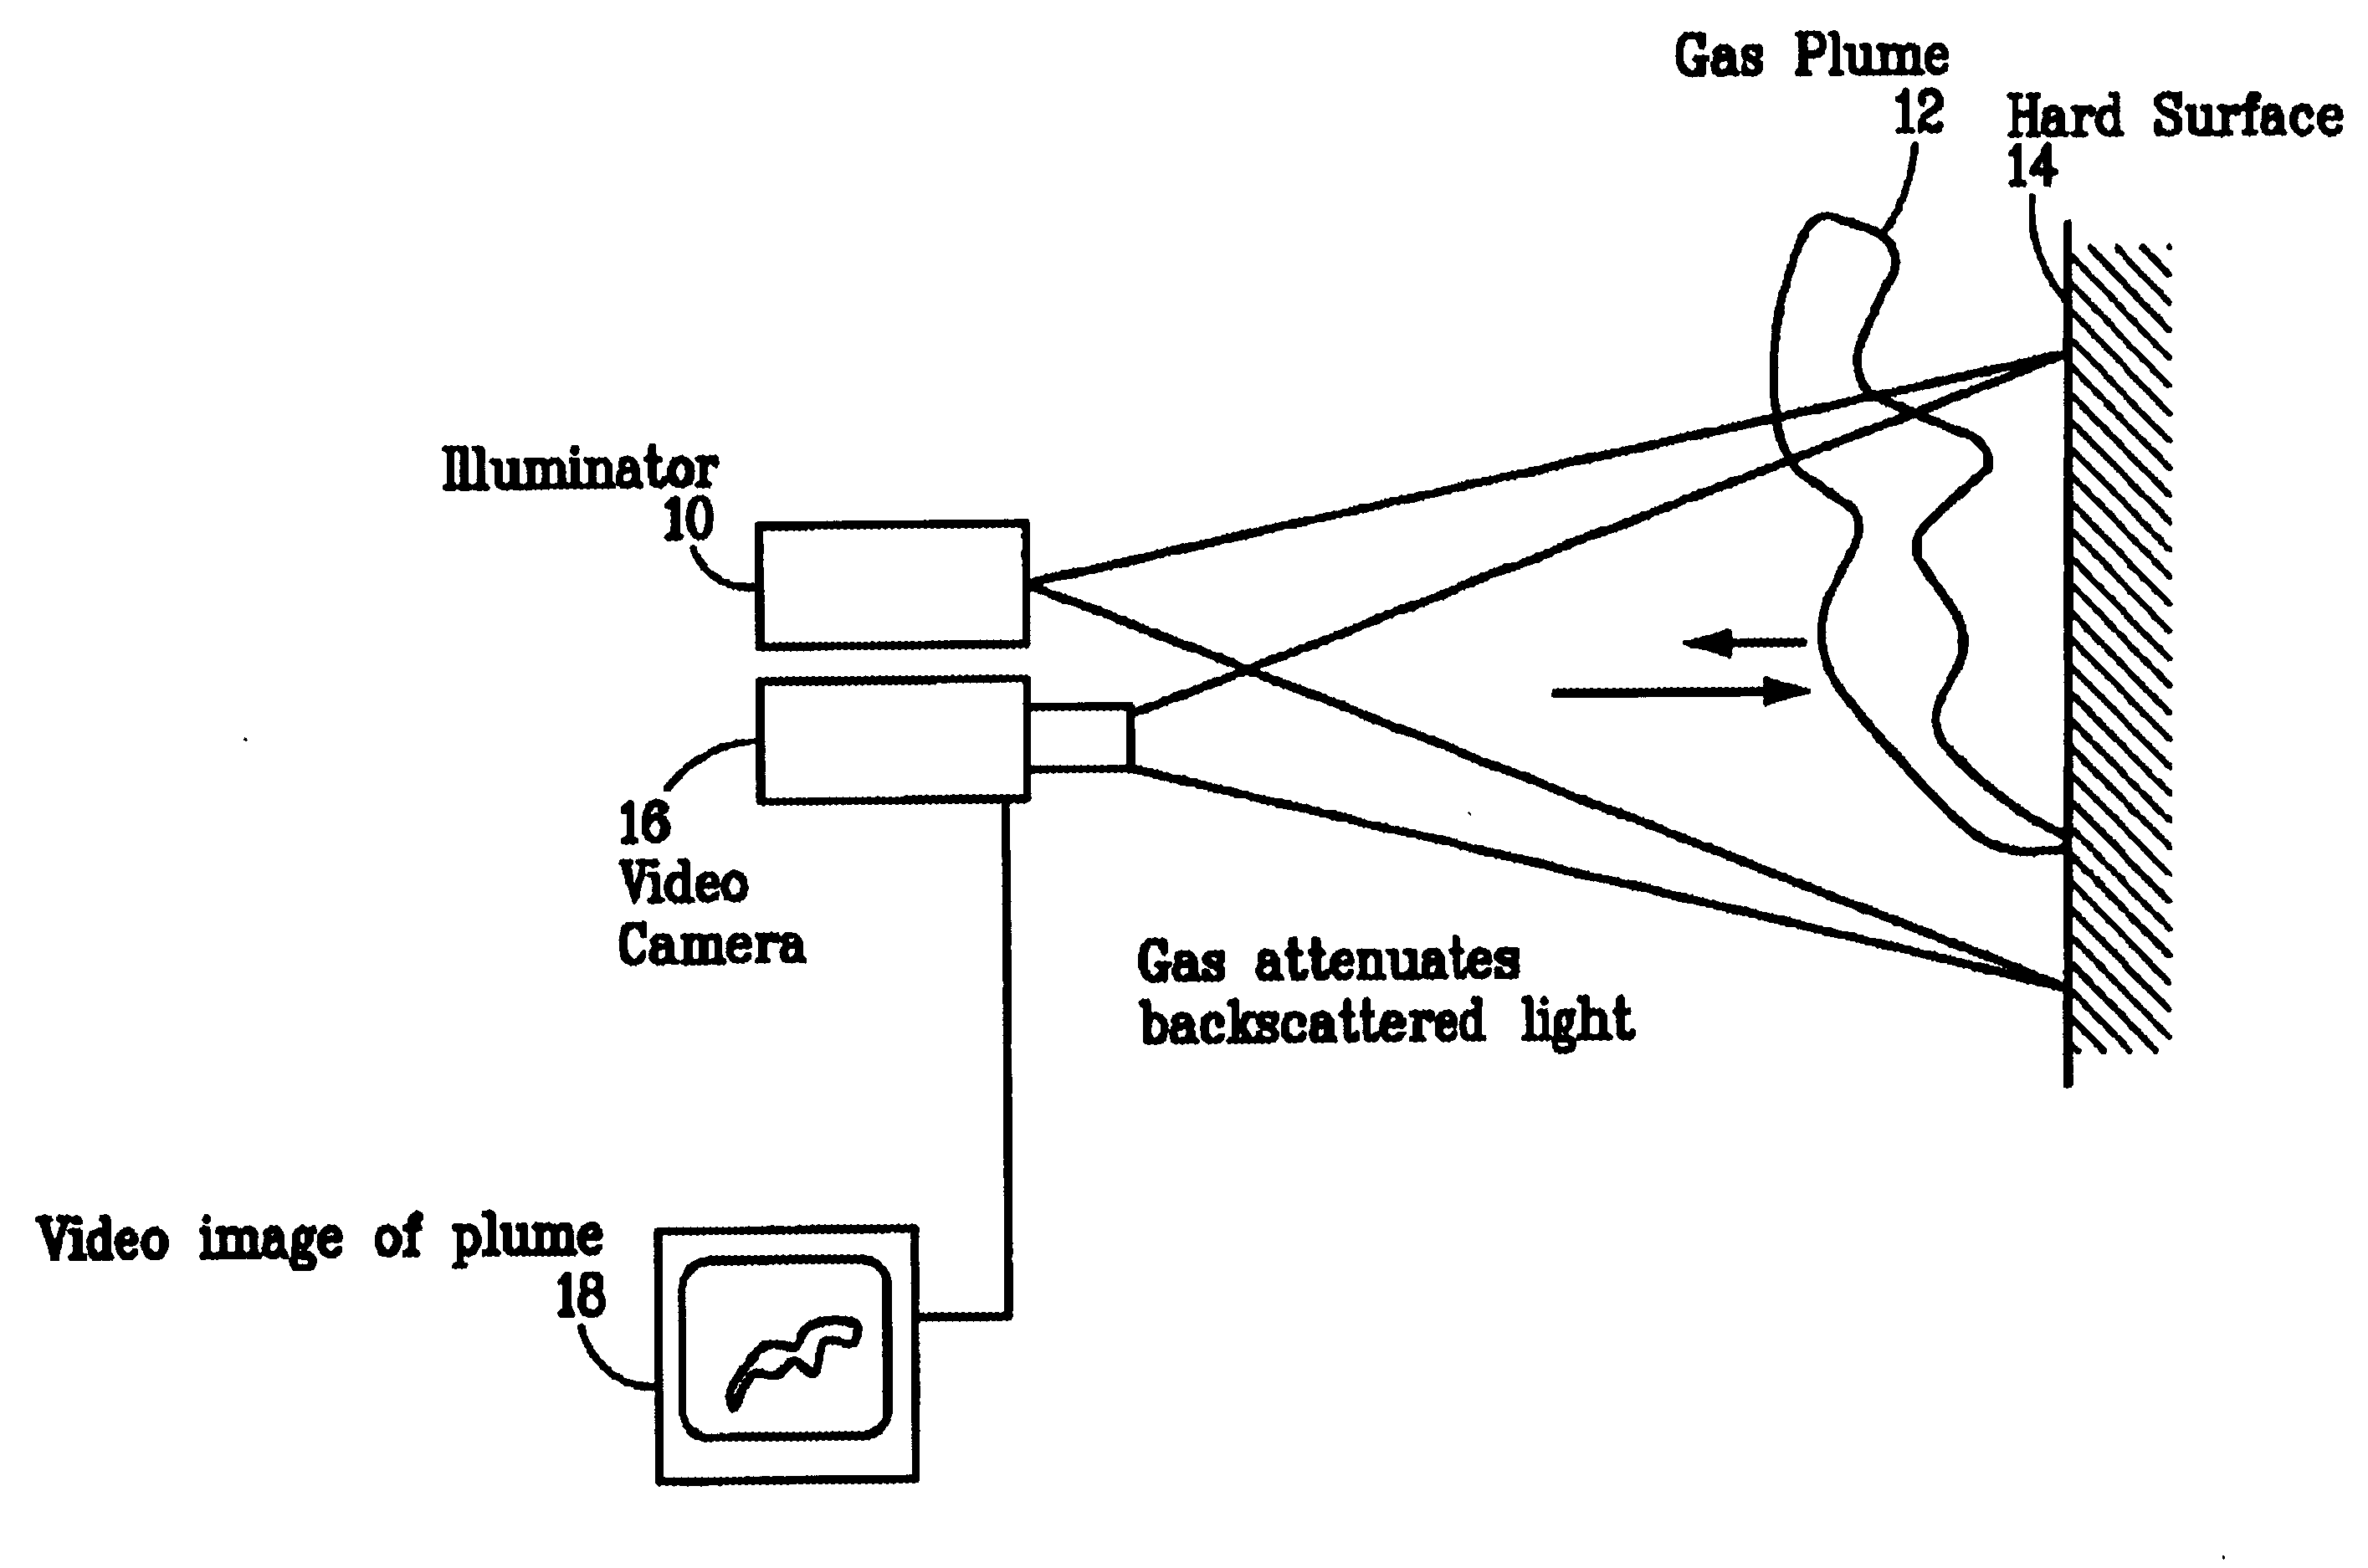 Pulsed laser linescanner for a backscatter absorption gas imaging system